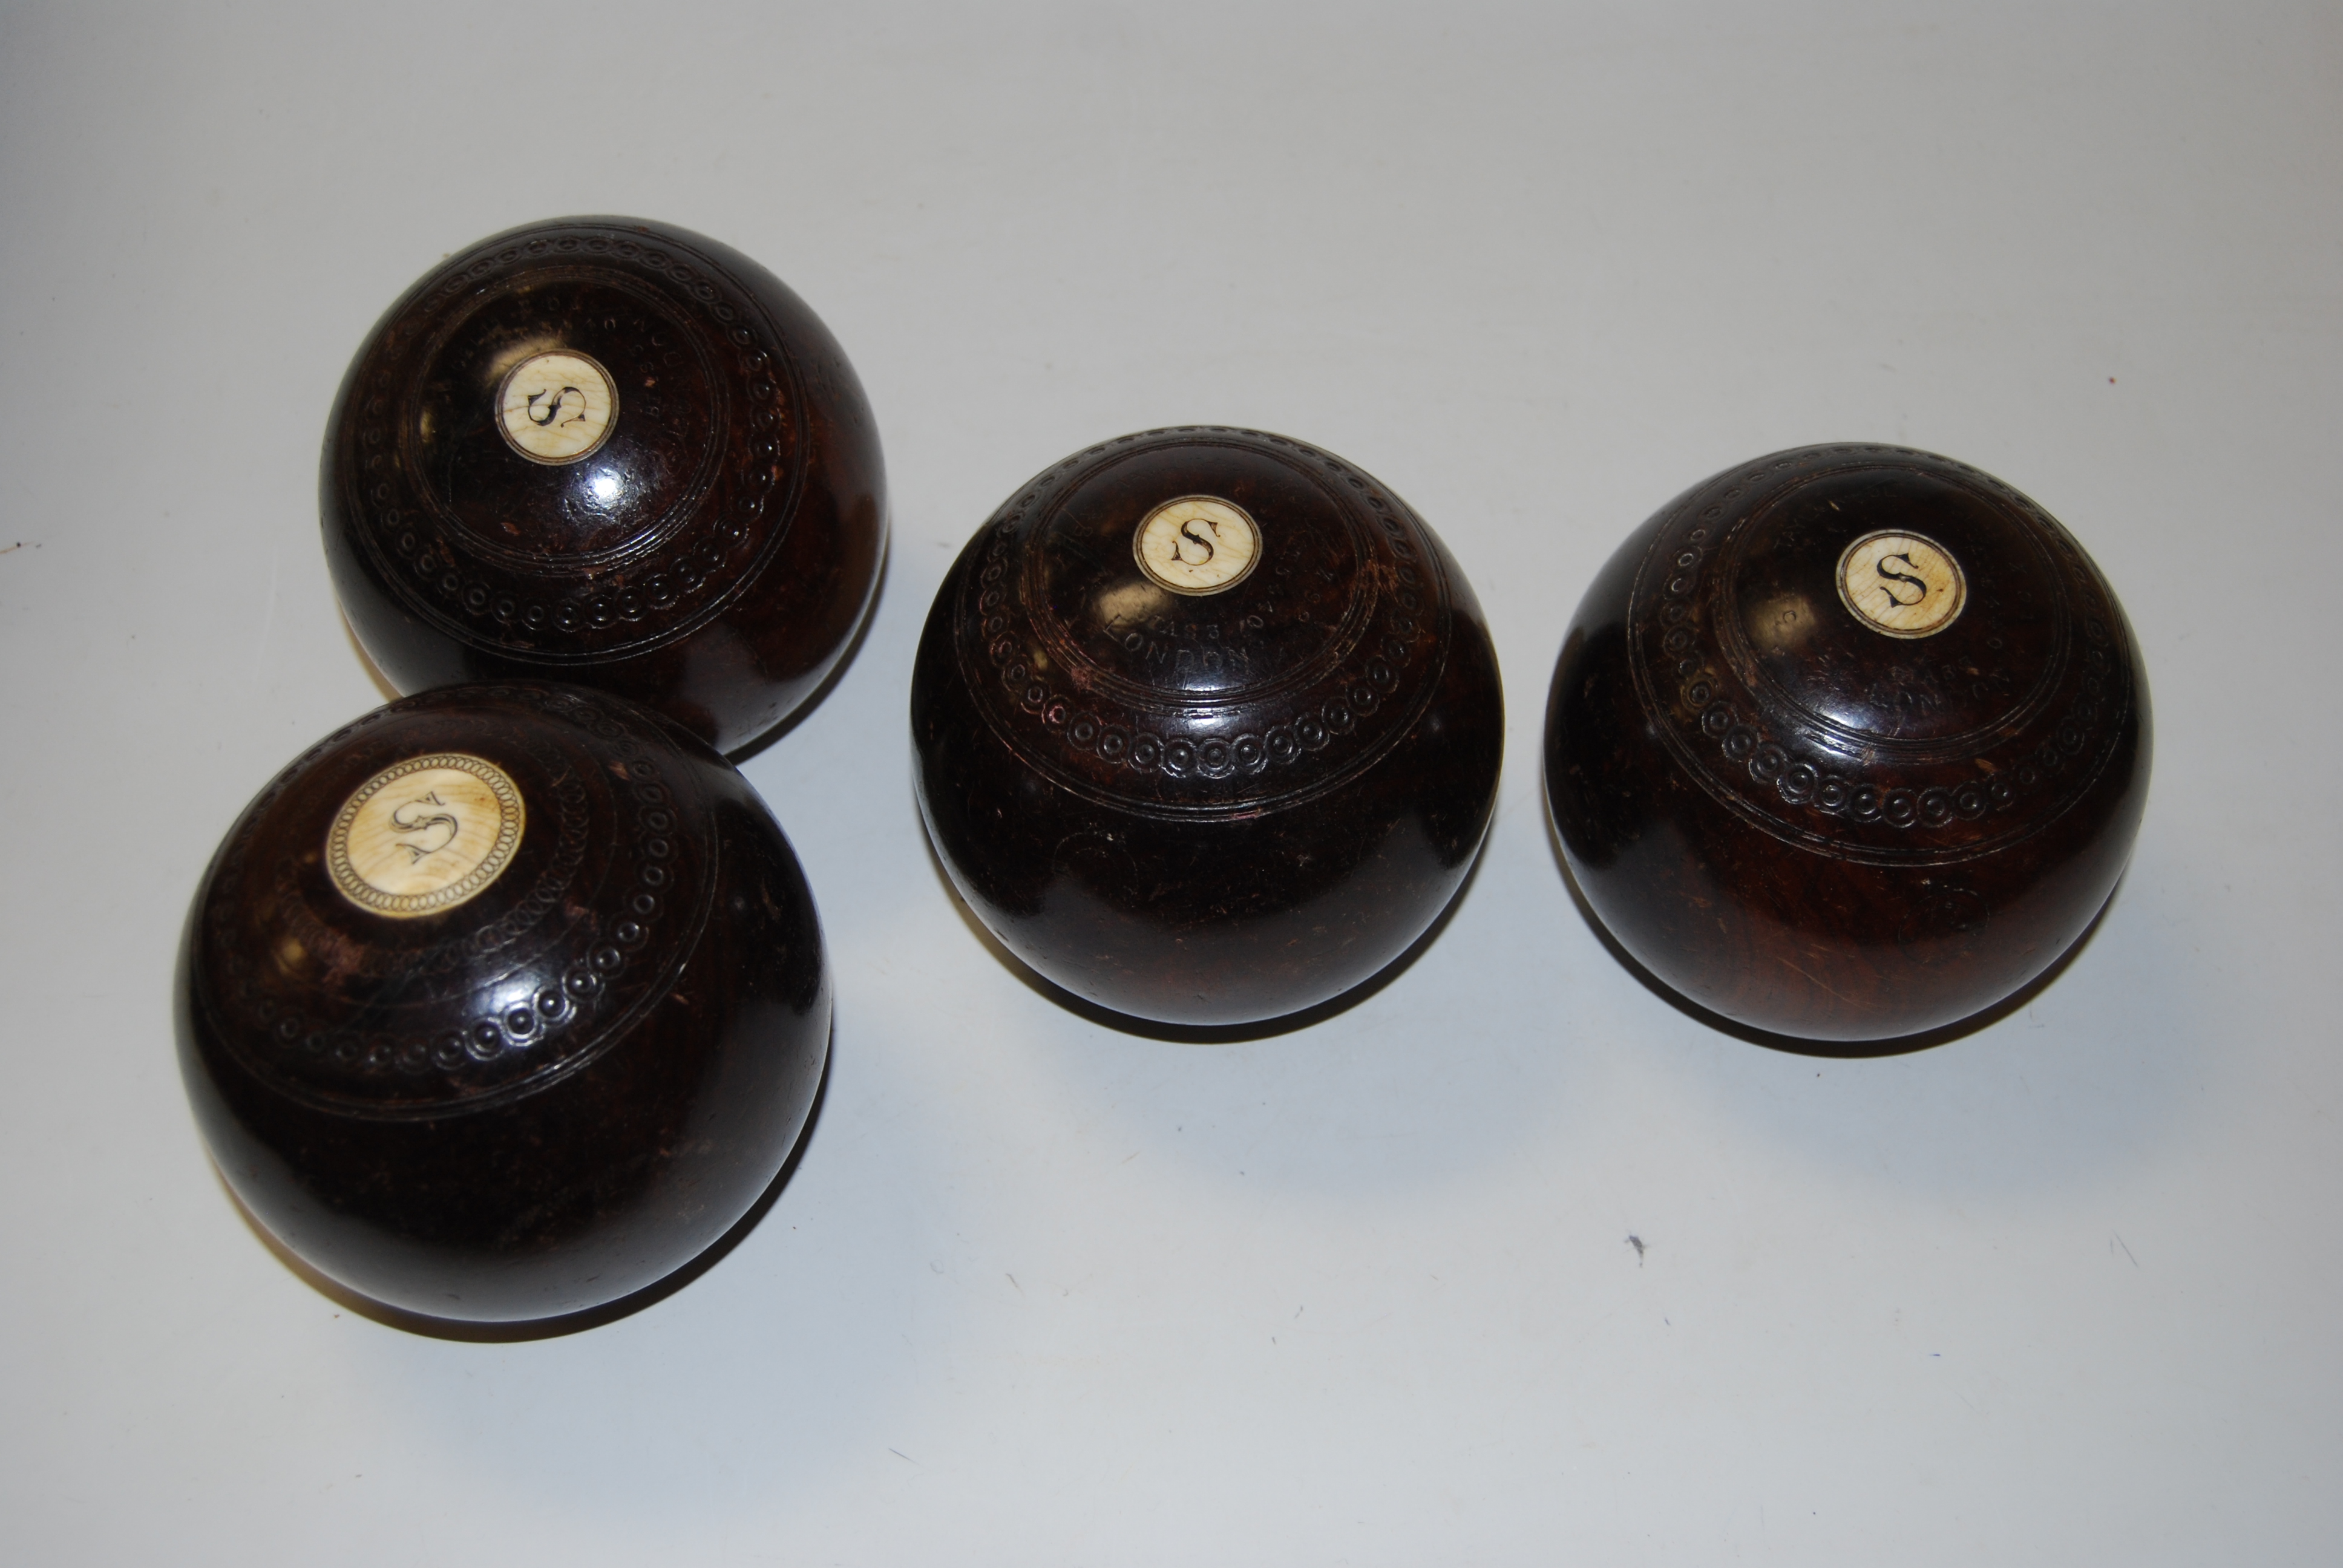 Four lignam vitae lawn bowls